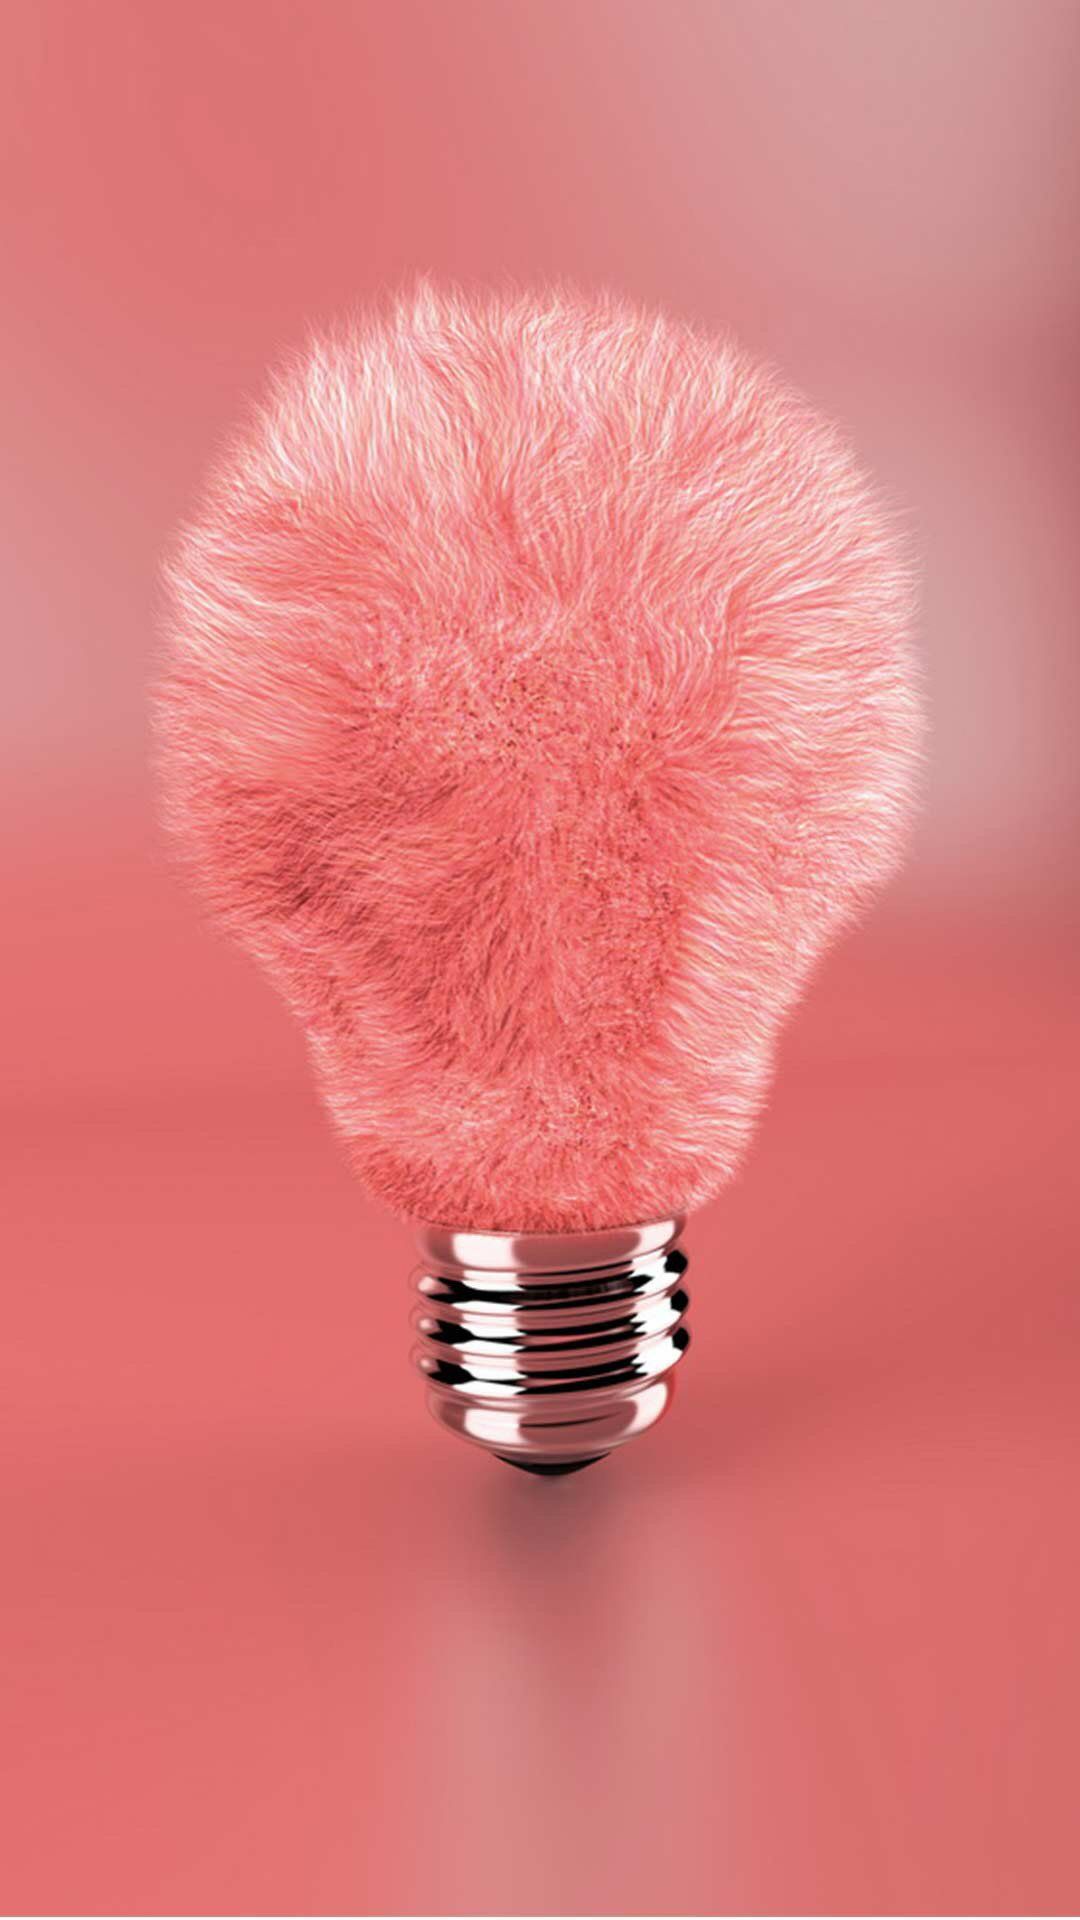 Pink Fur Background Images  Free Download on Freepik